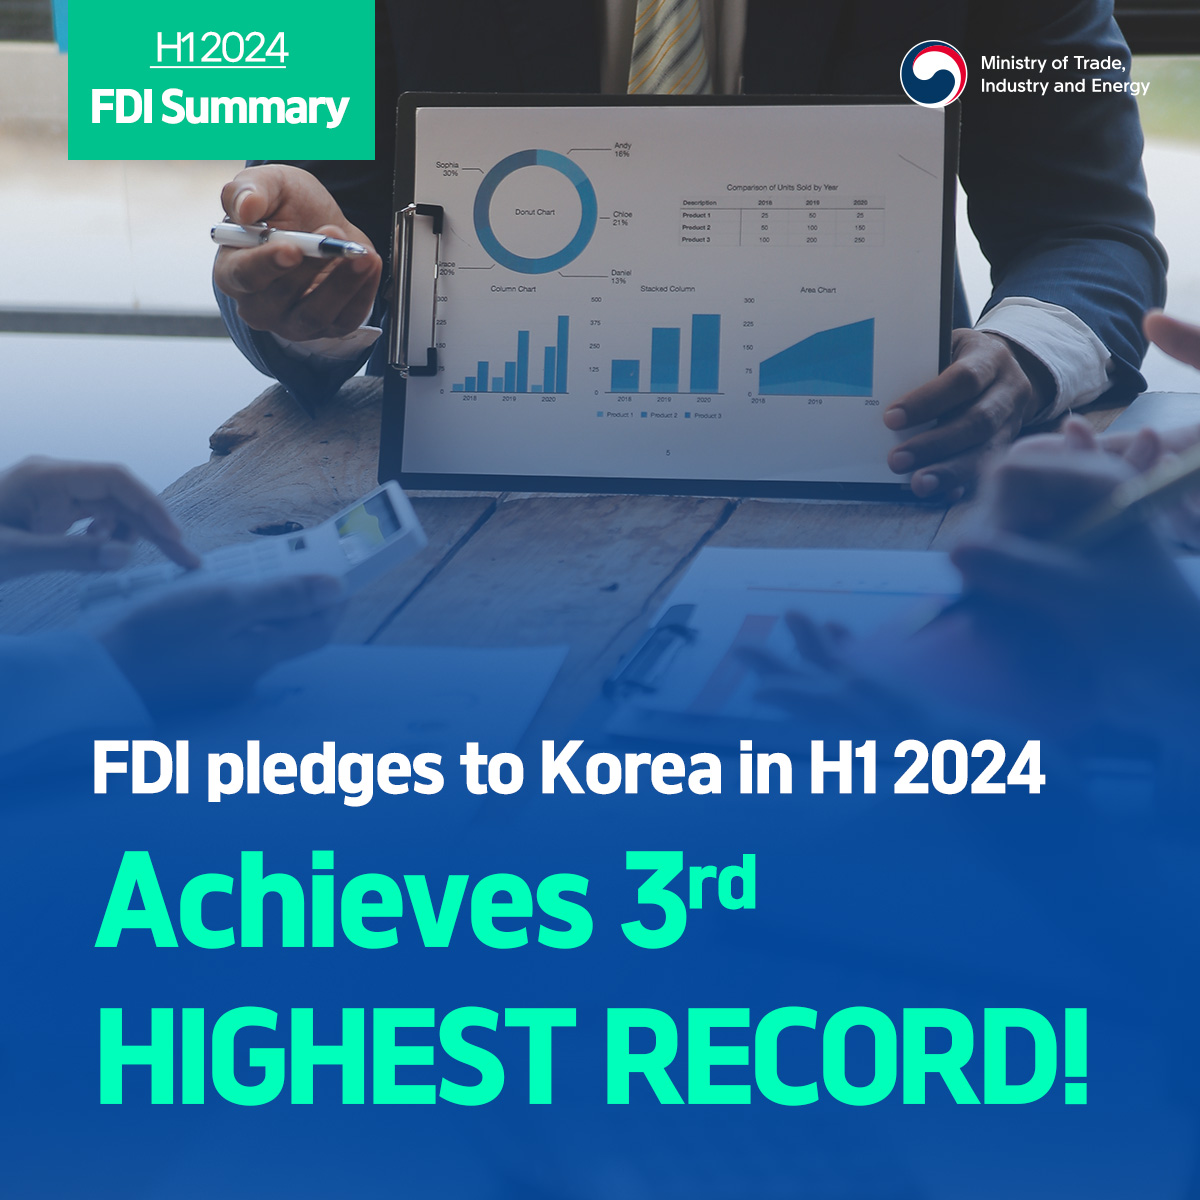 FDI pledges to Korea achieve 3rd highest H1 record in 2024!